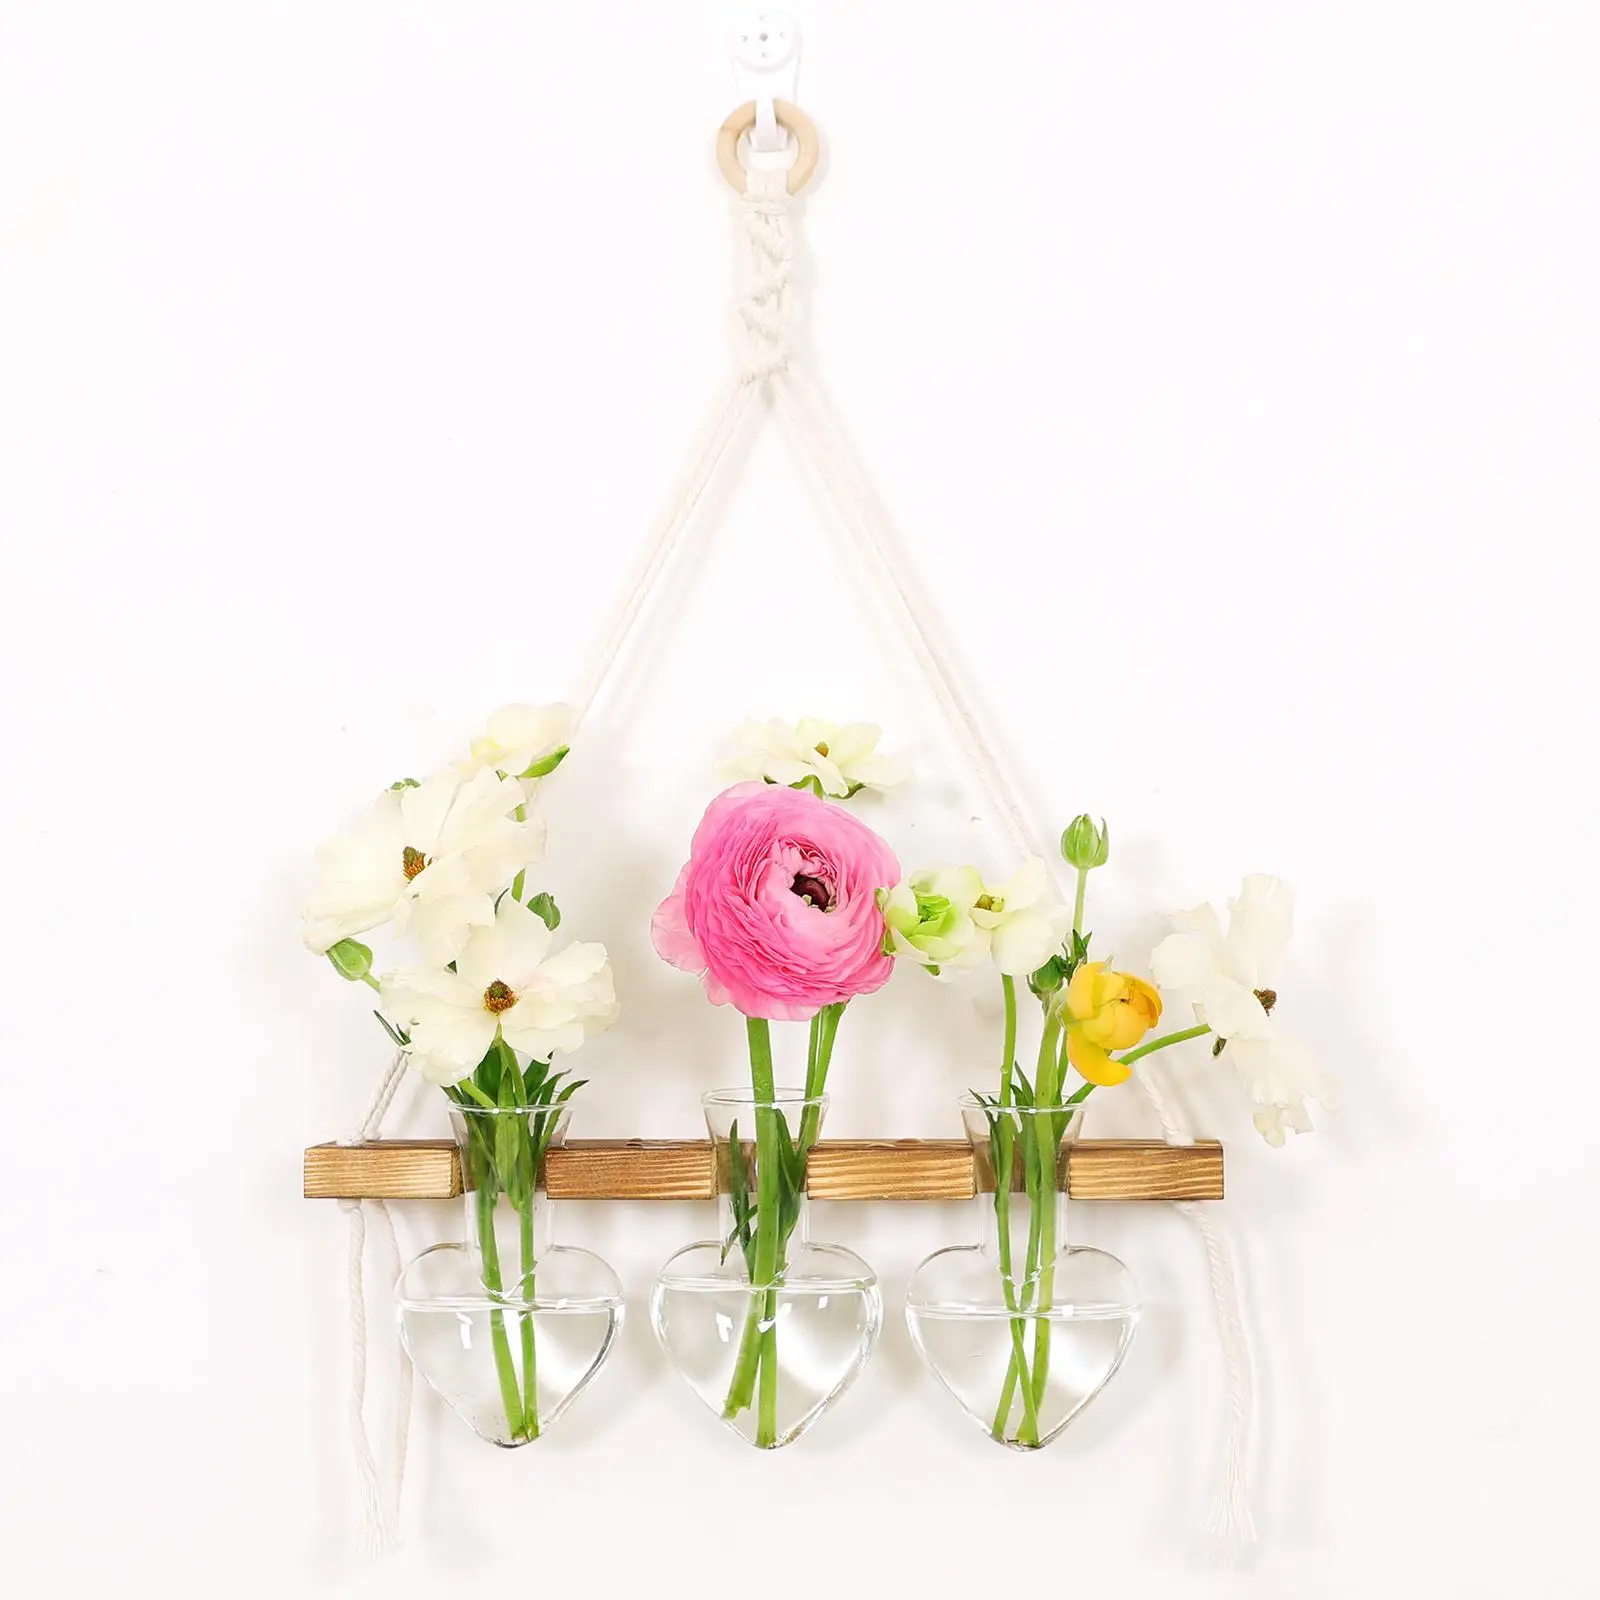 Wall Hanging Planter Wooden Frame Stand Modern Glass Flower Vase for Garden Decor